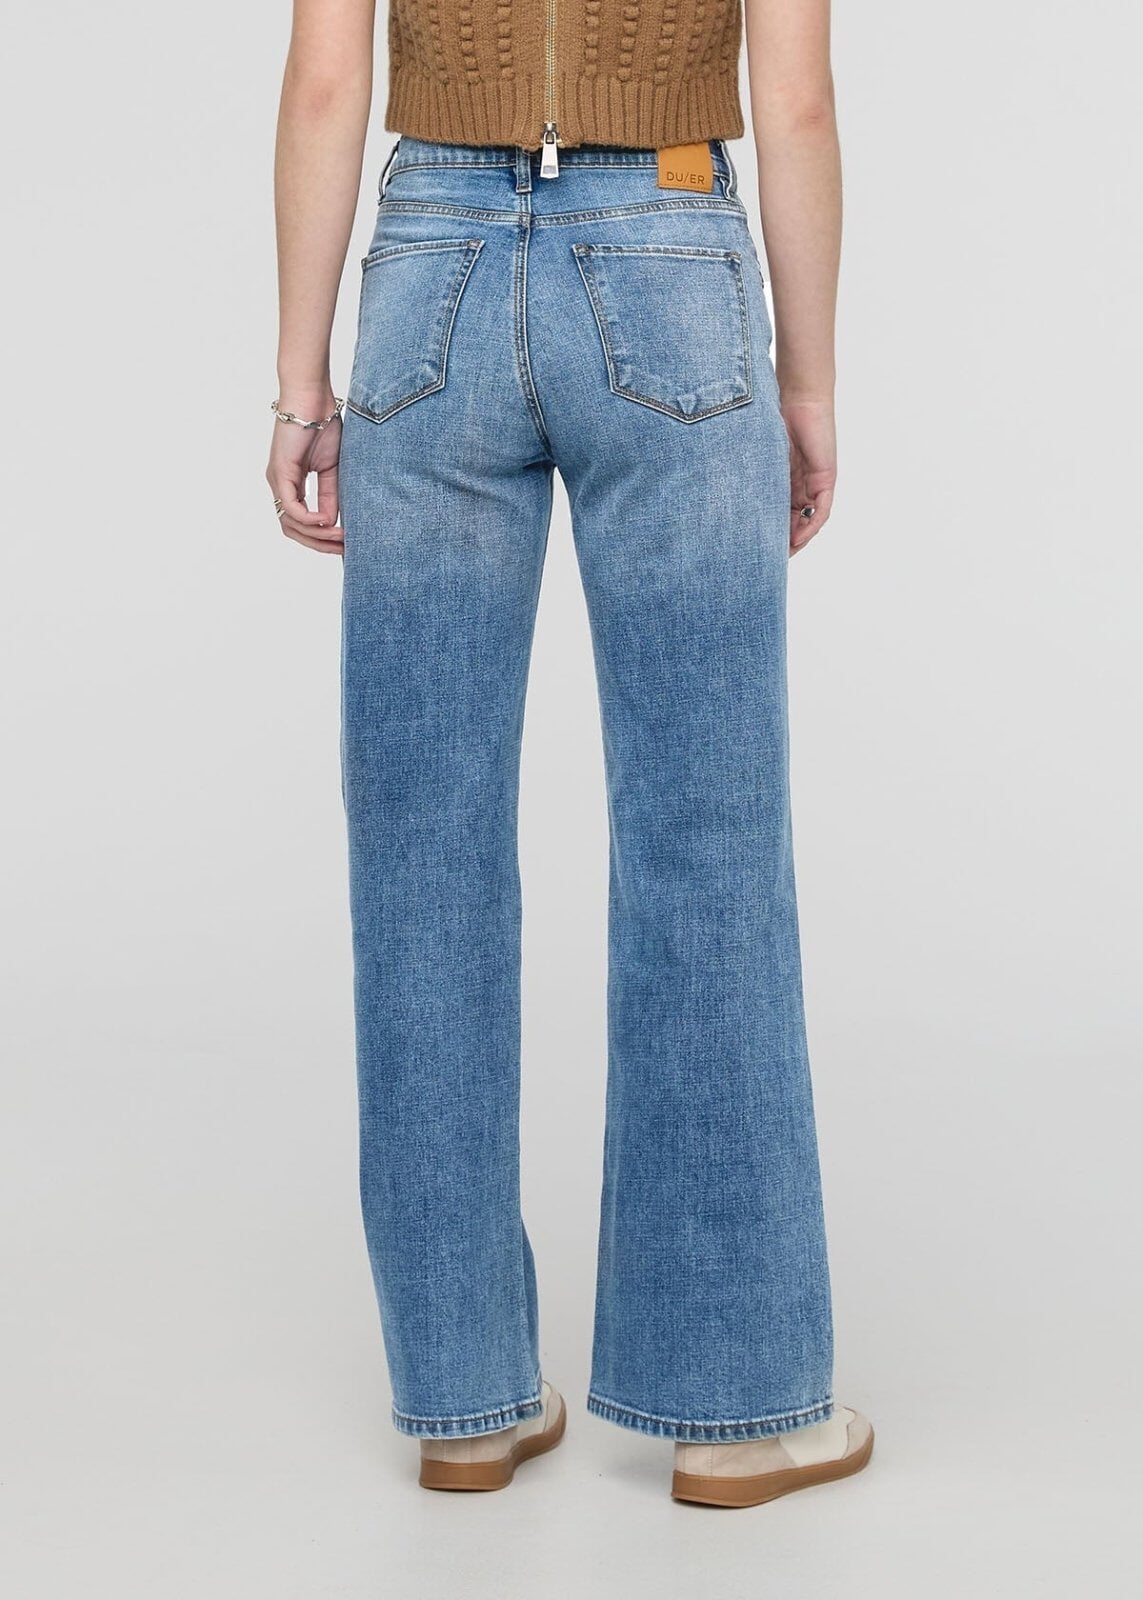 womens high rise wide leg blue jeans back